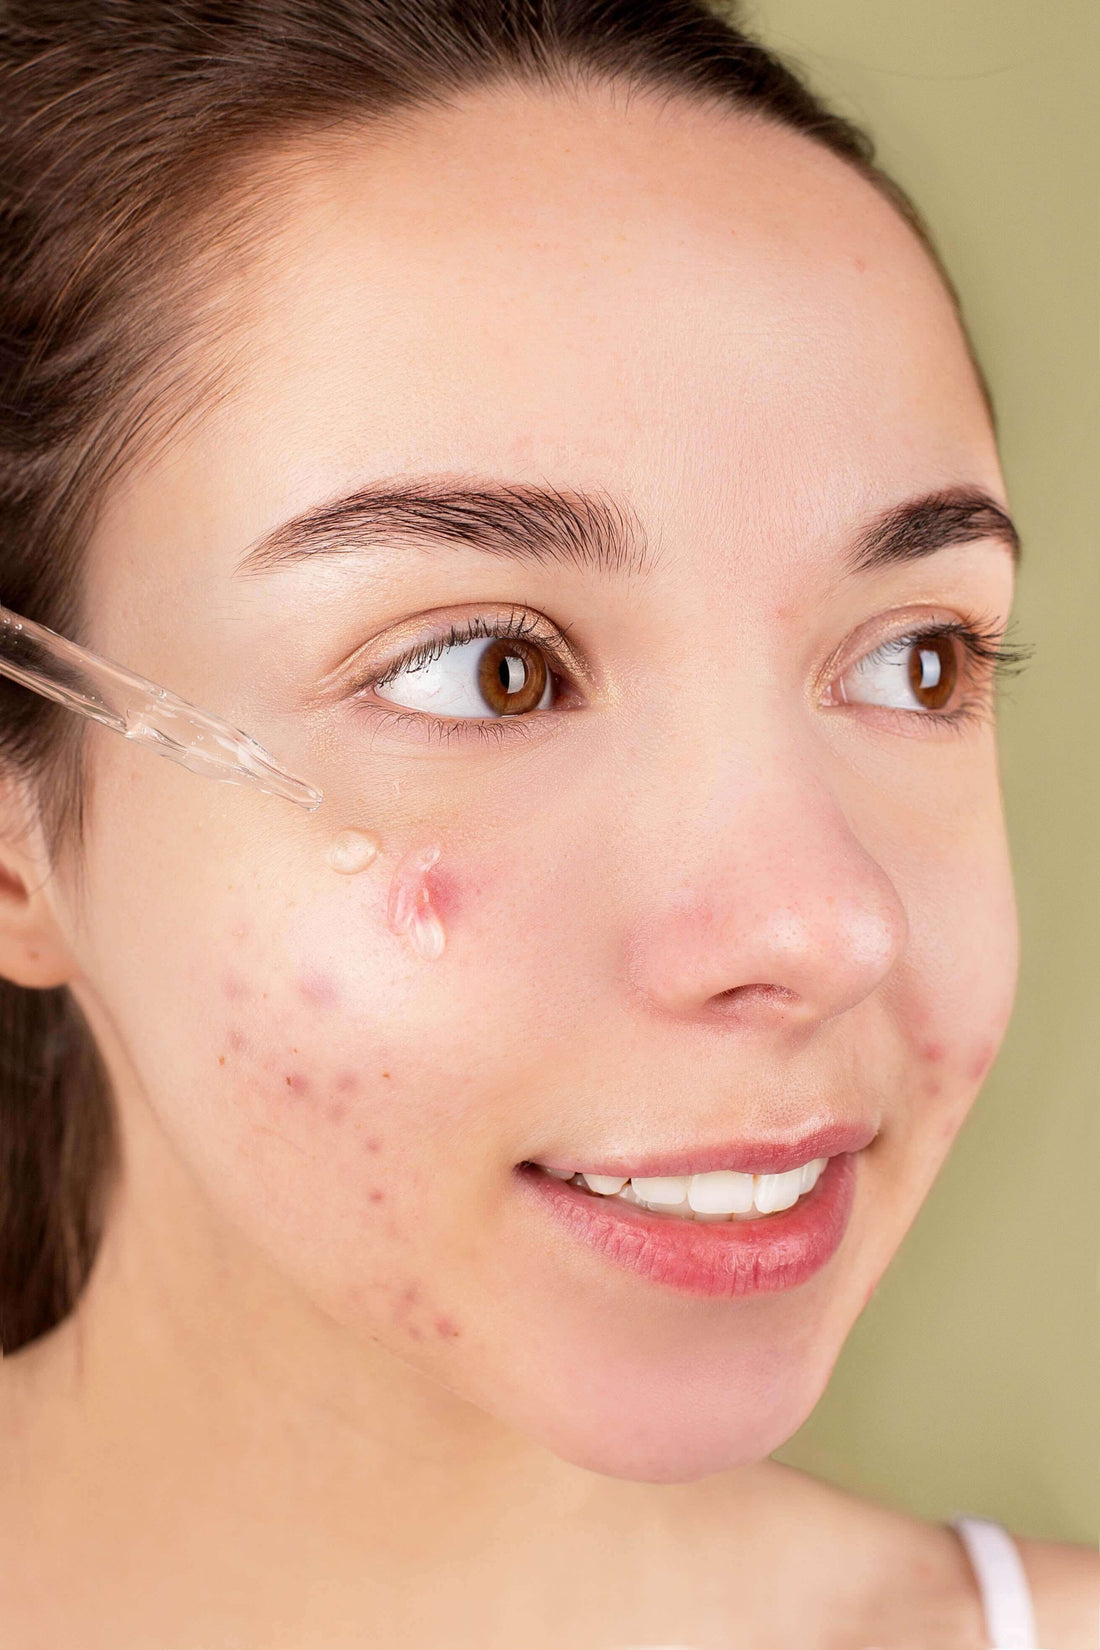 Natural Acne Treatment: Zhiiva Skincare